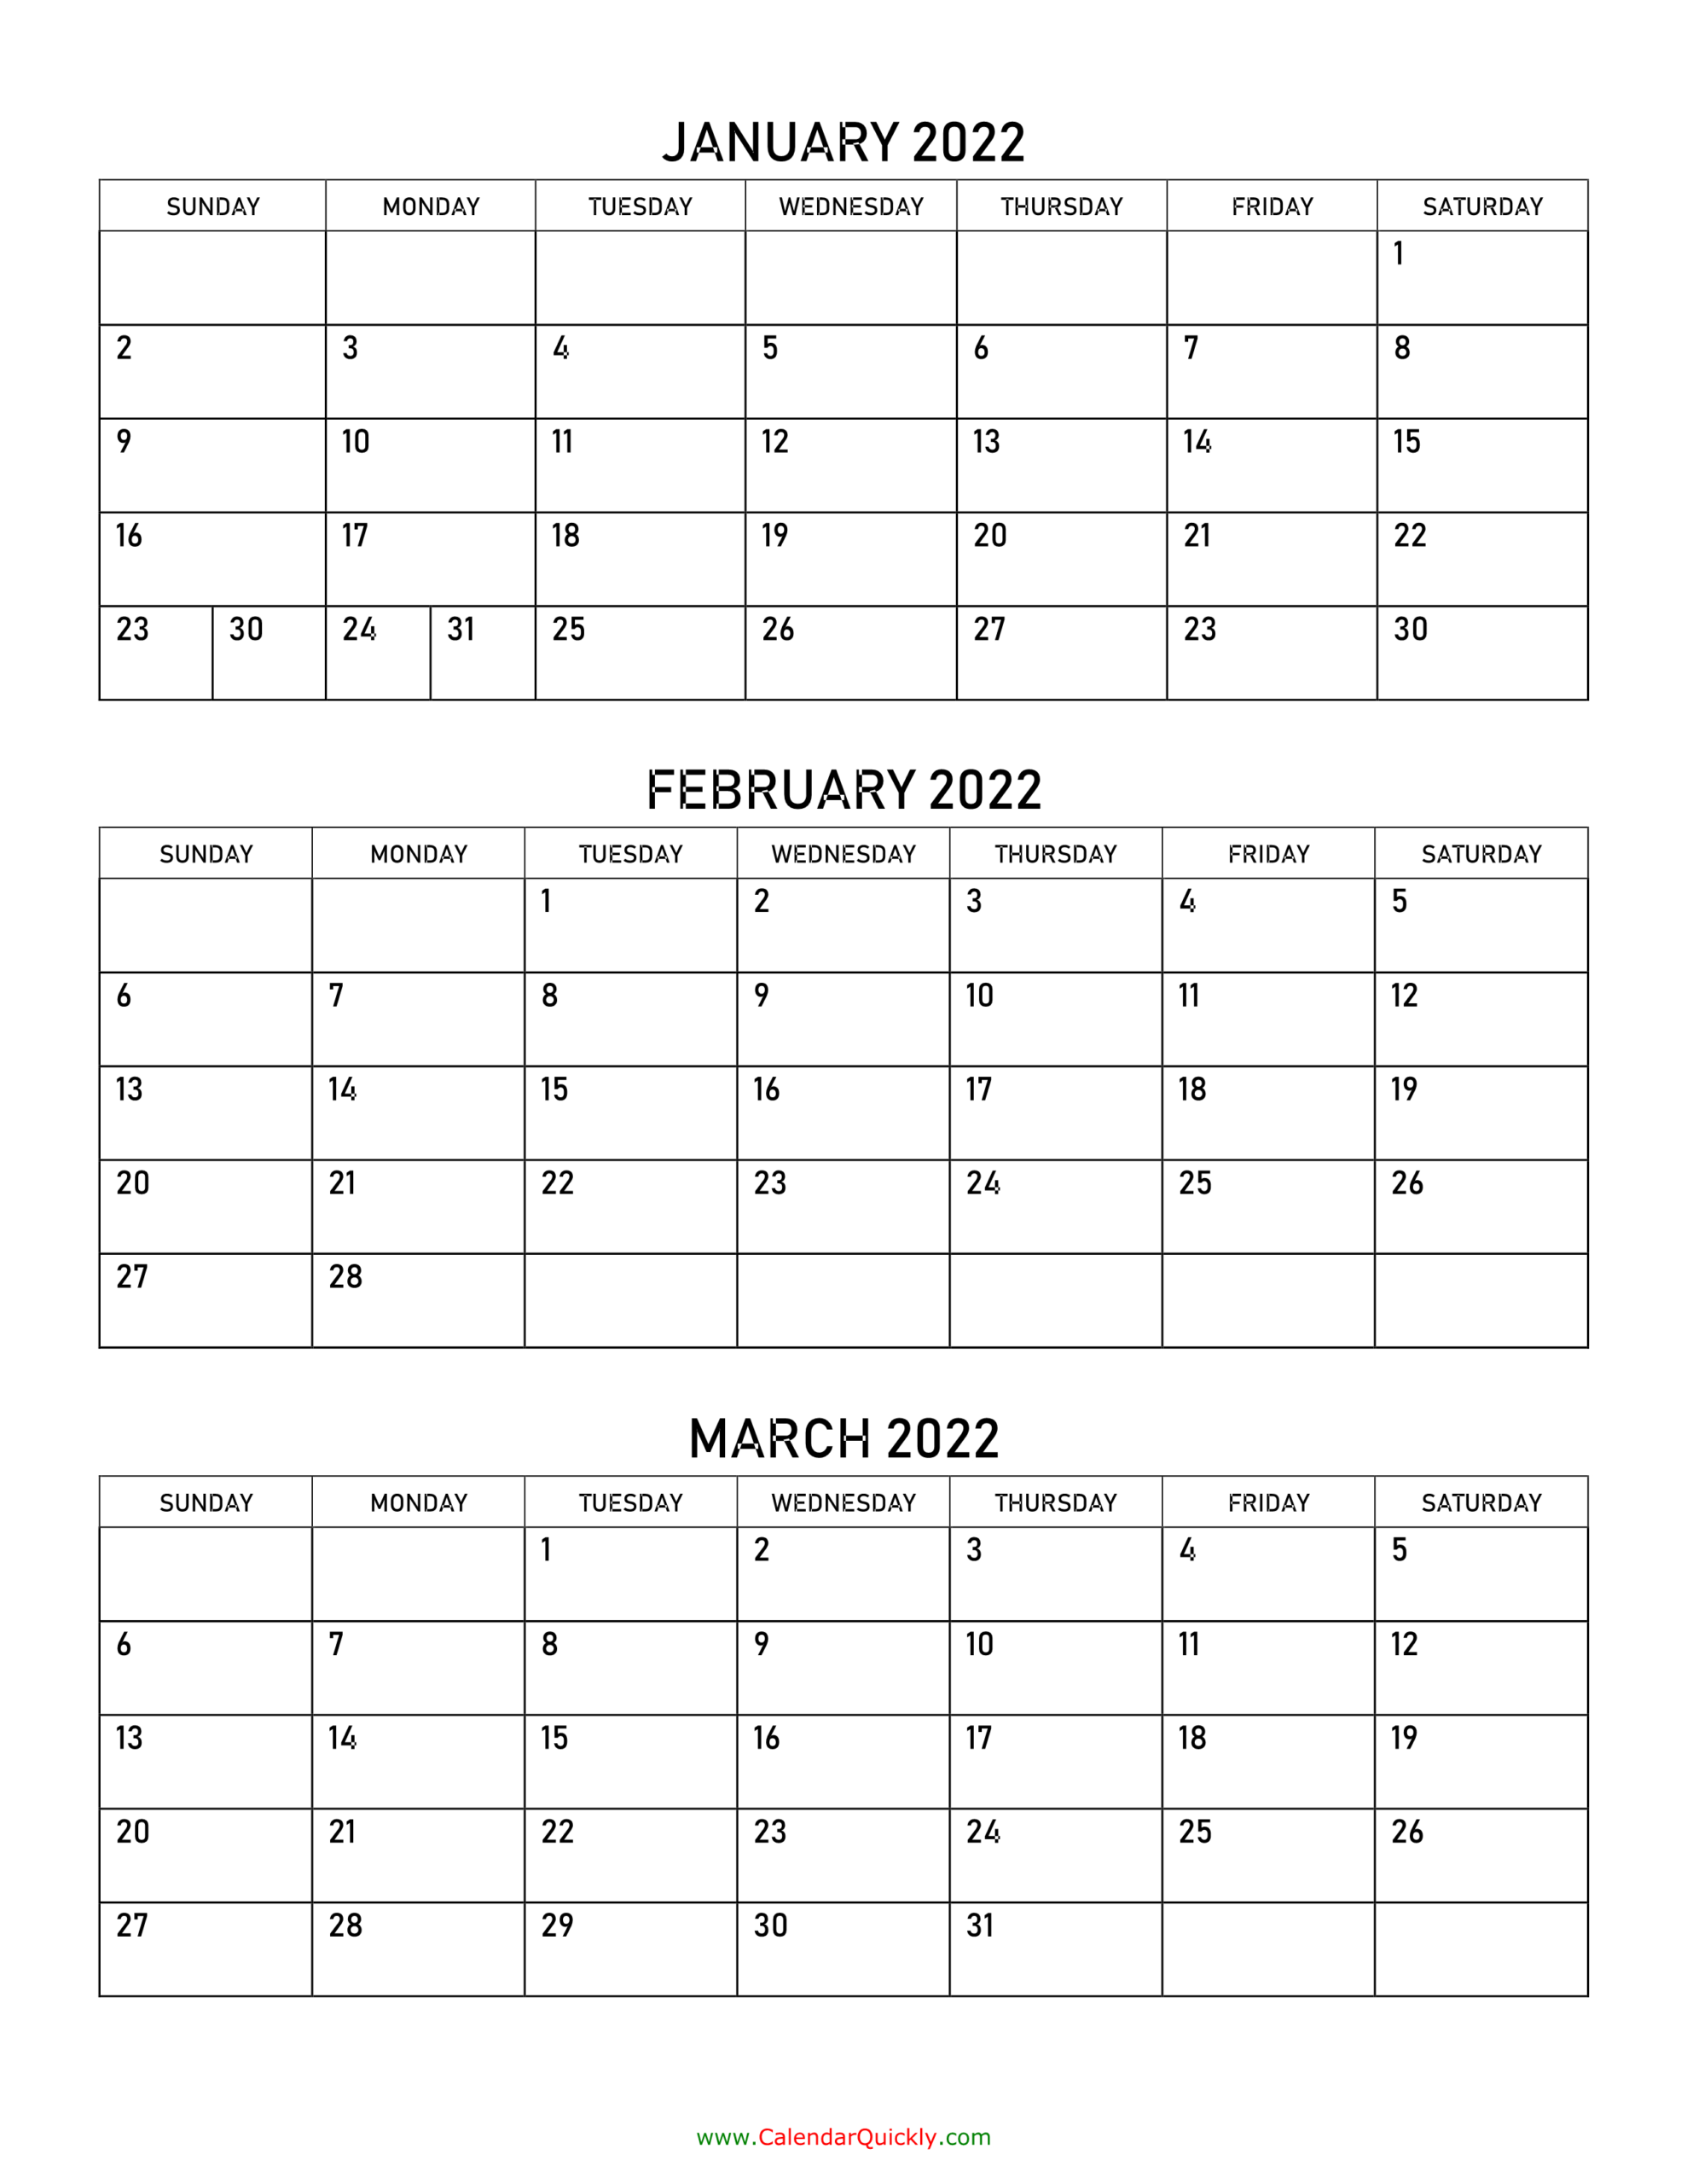 January To March 2022 Calendar | Calendar Quickly  Scps 2022 To 2022 Calendar